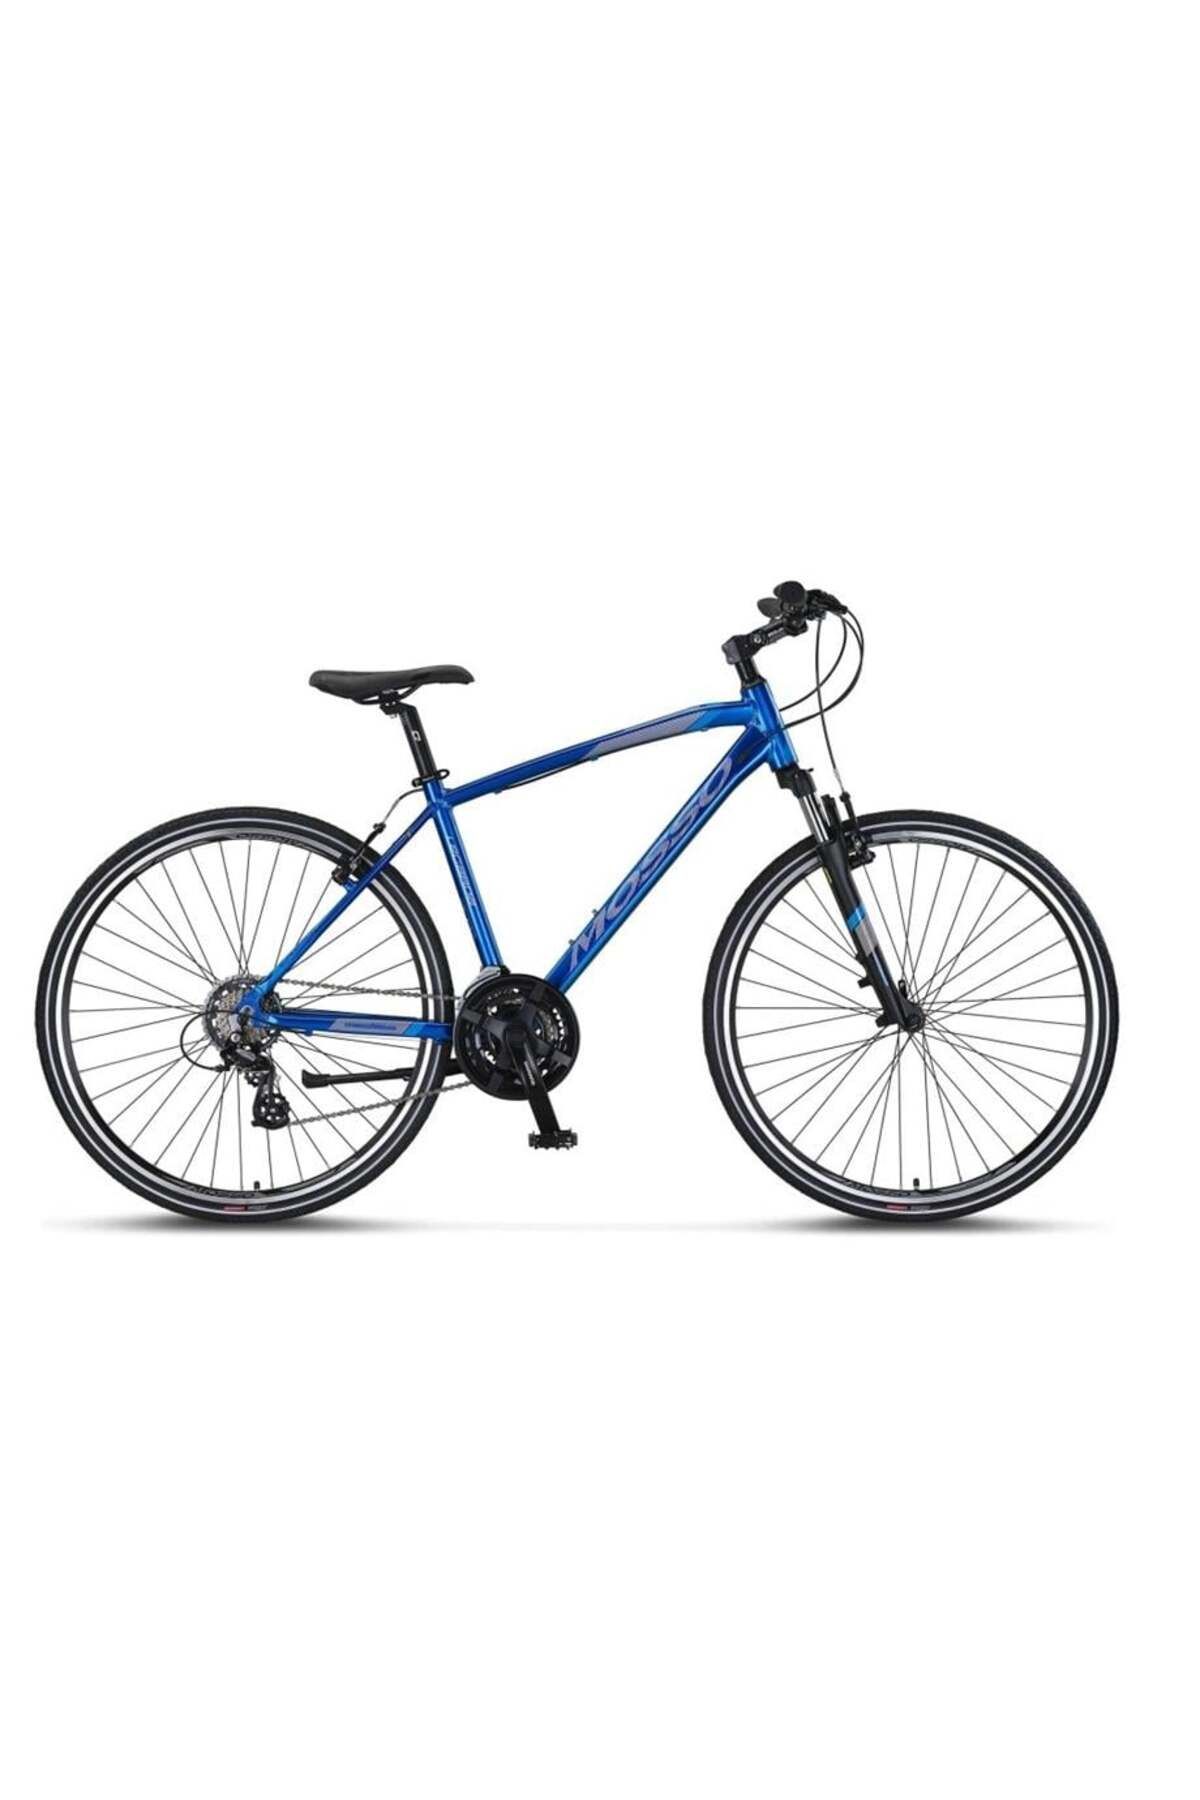 Mosso Legarda-2321-msm-v Erkek Şehir Bisikleti 460h V 28 Jant 21 Vites Lacivert Mavi